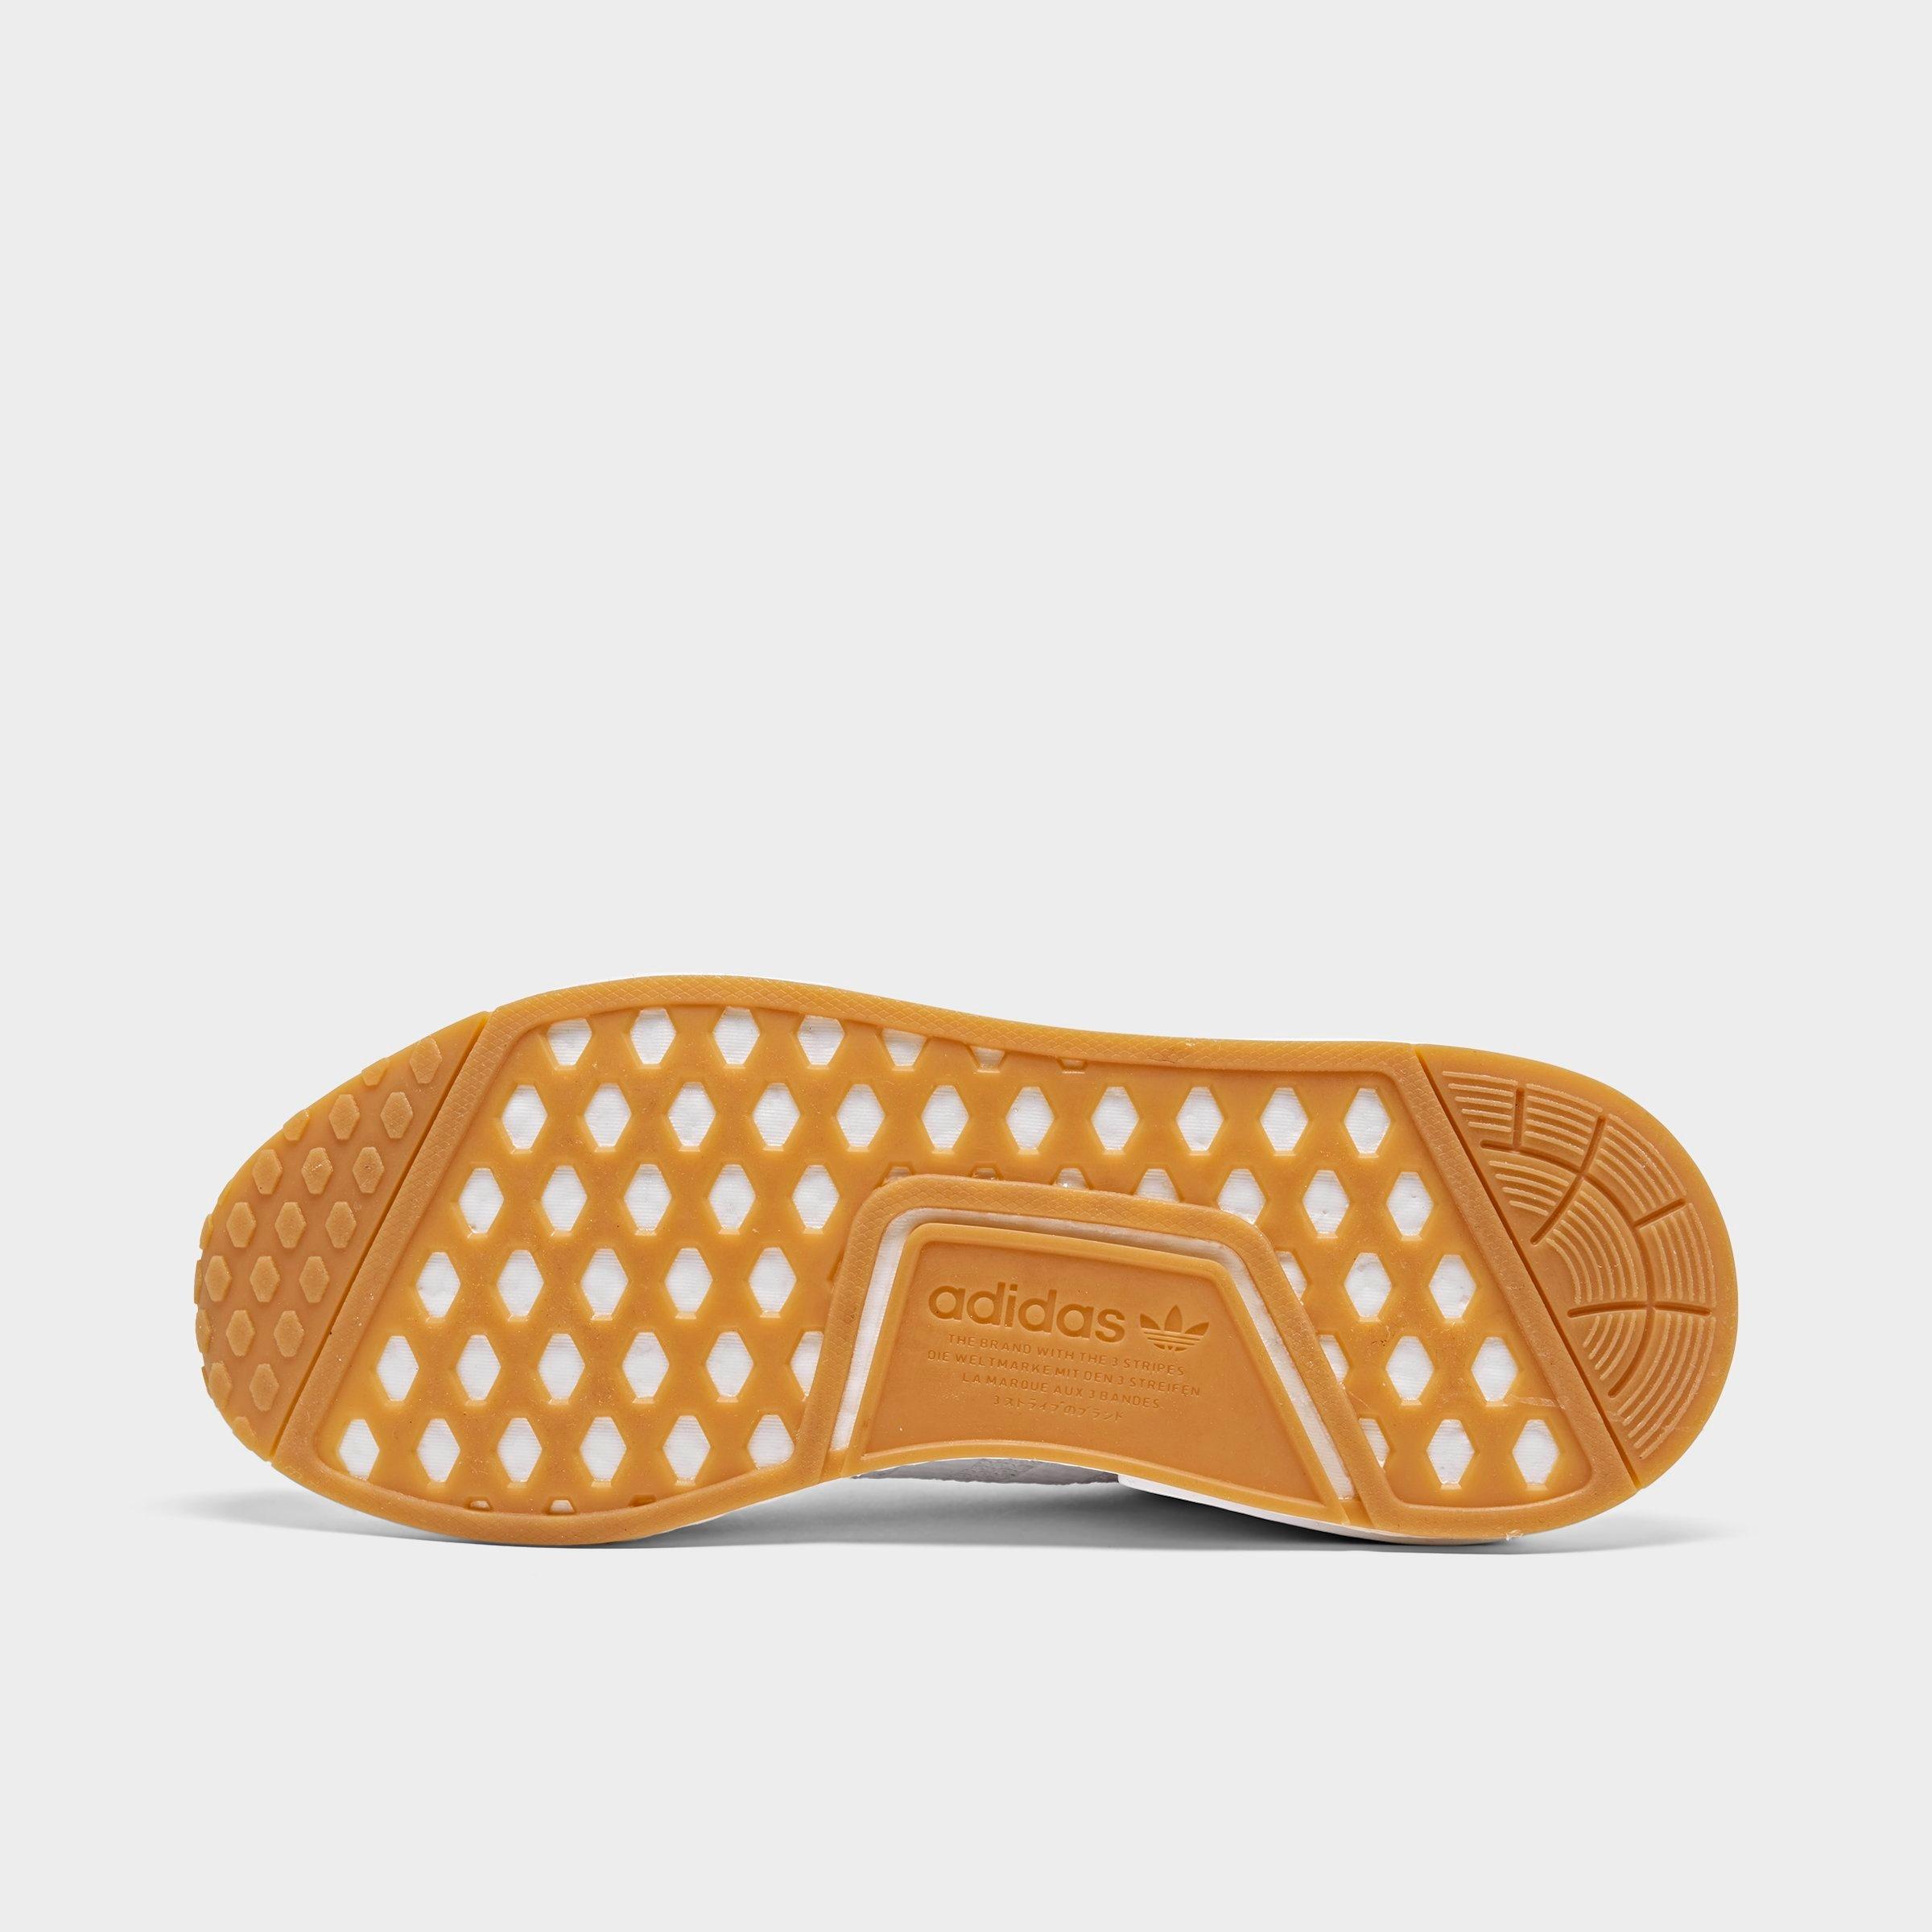 adidas nmd r1 stlt primeknit casual shoes